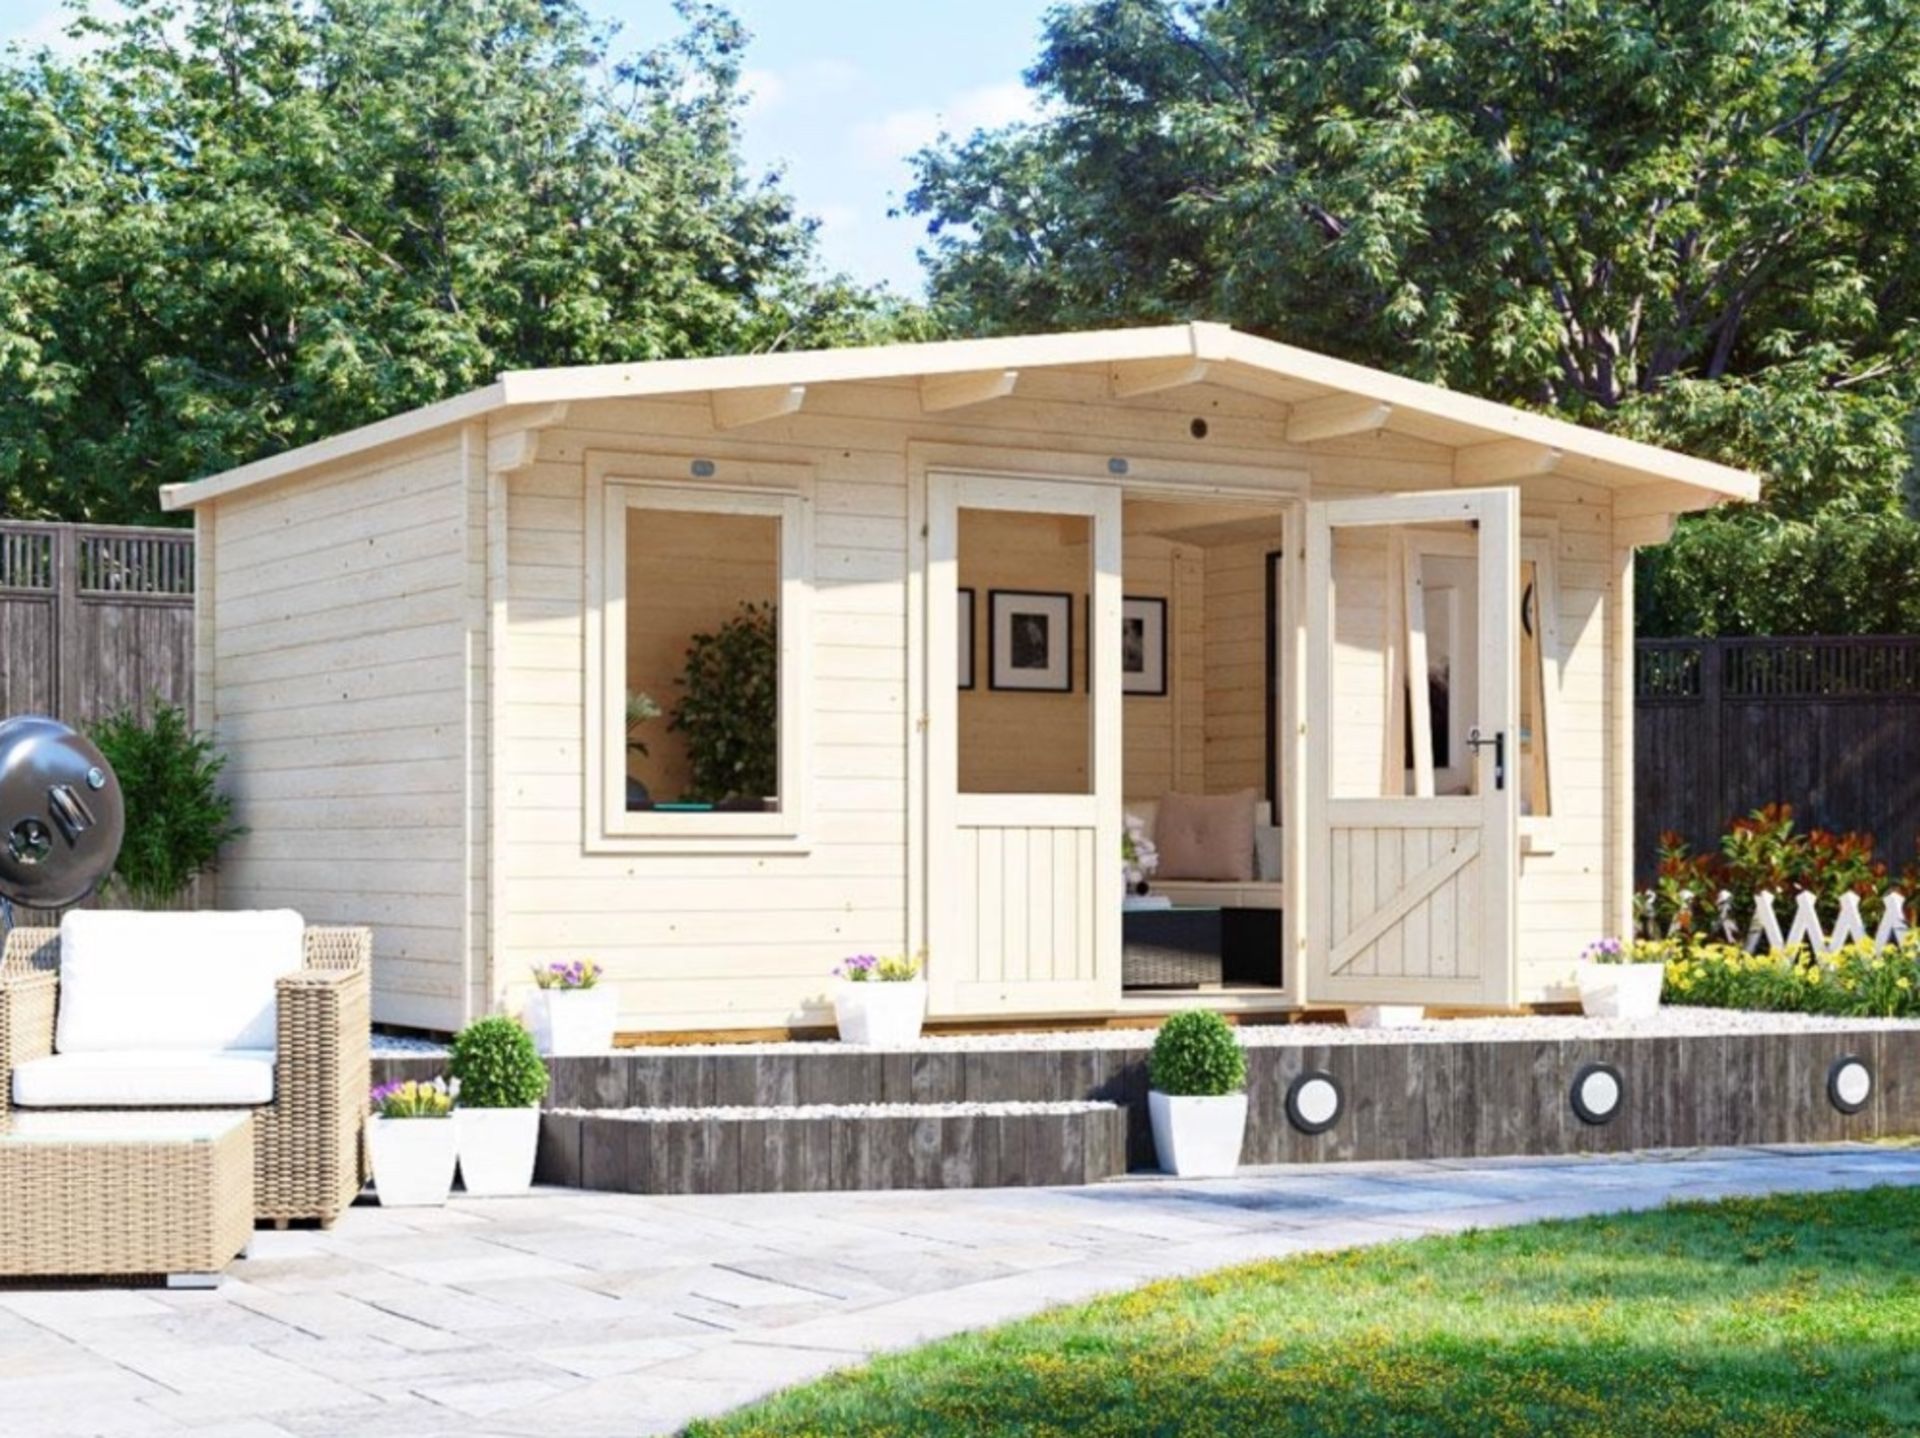 Brand New Log Cabin W5m x D3m RRP £3,699